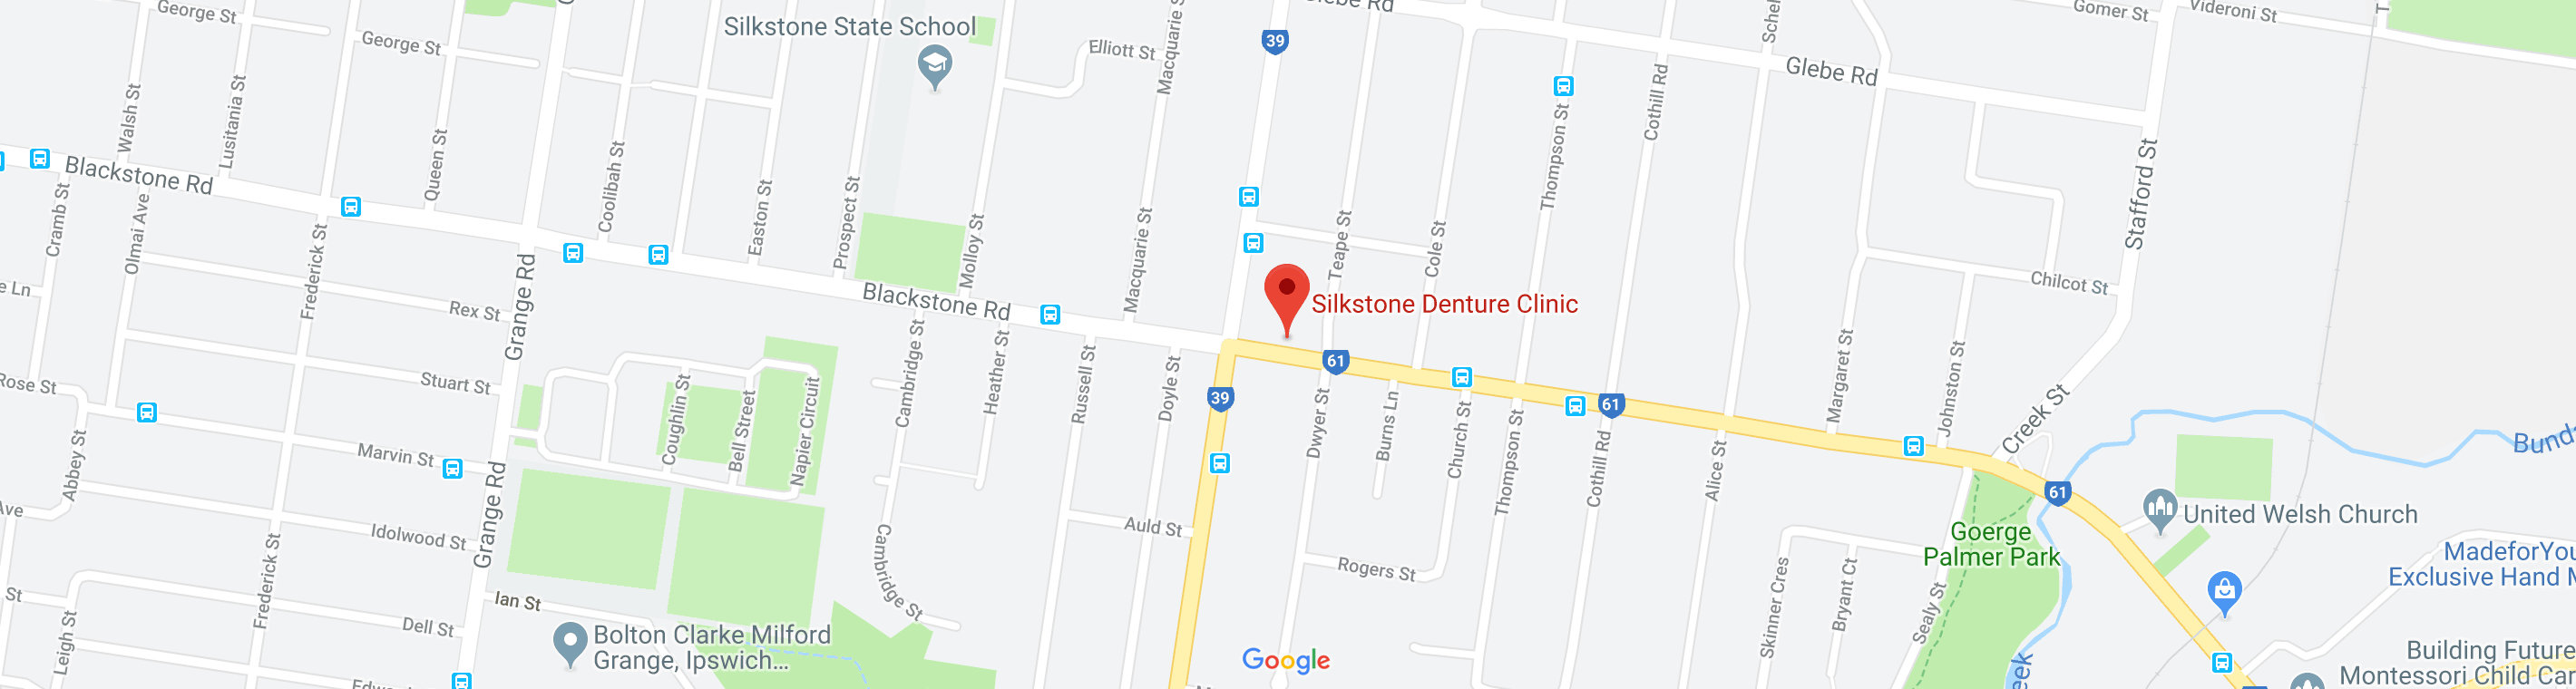 View Silkstone Denture Clinic location